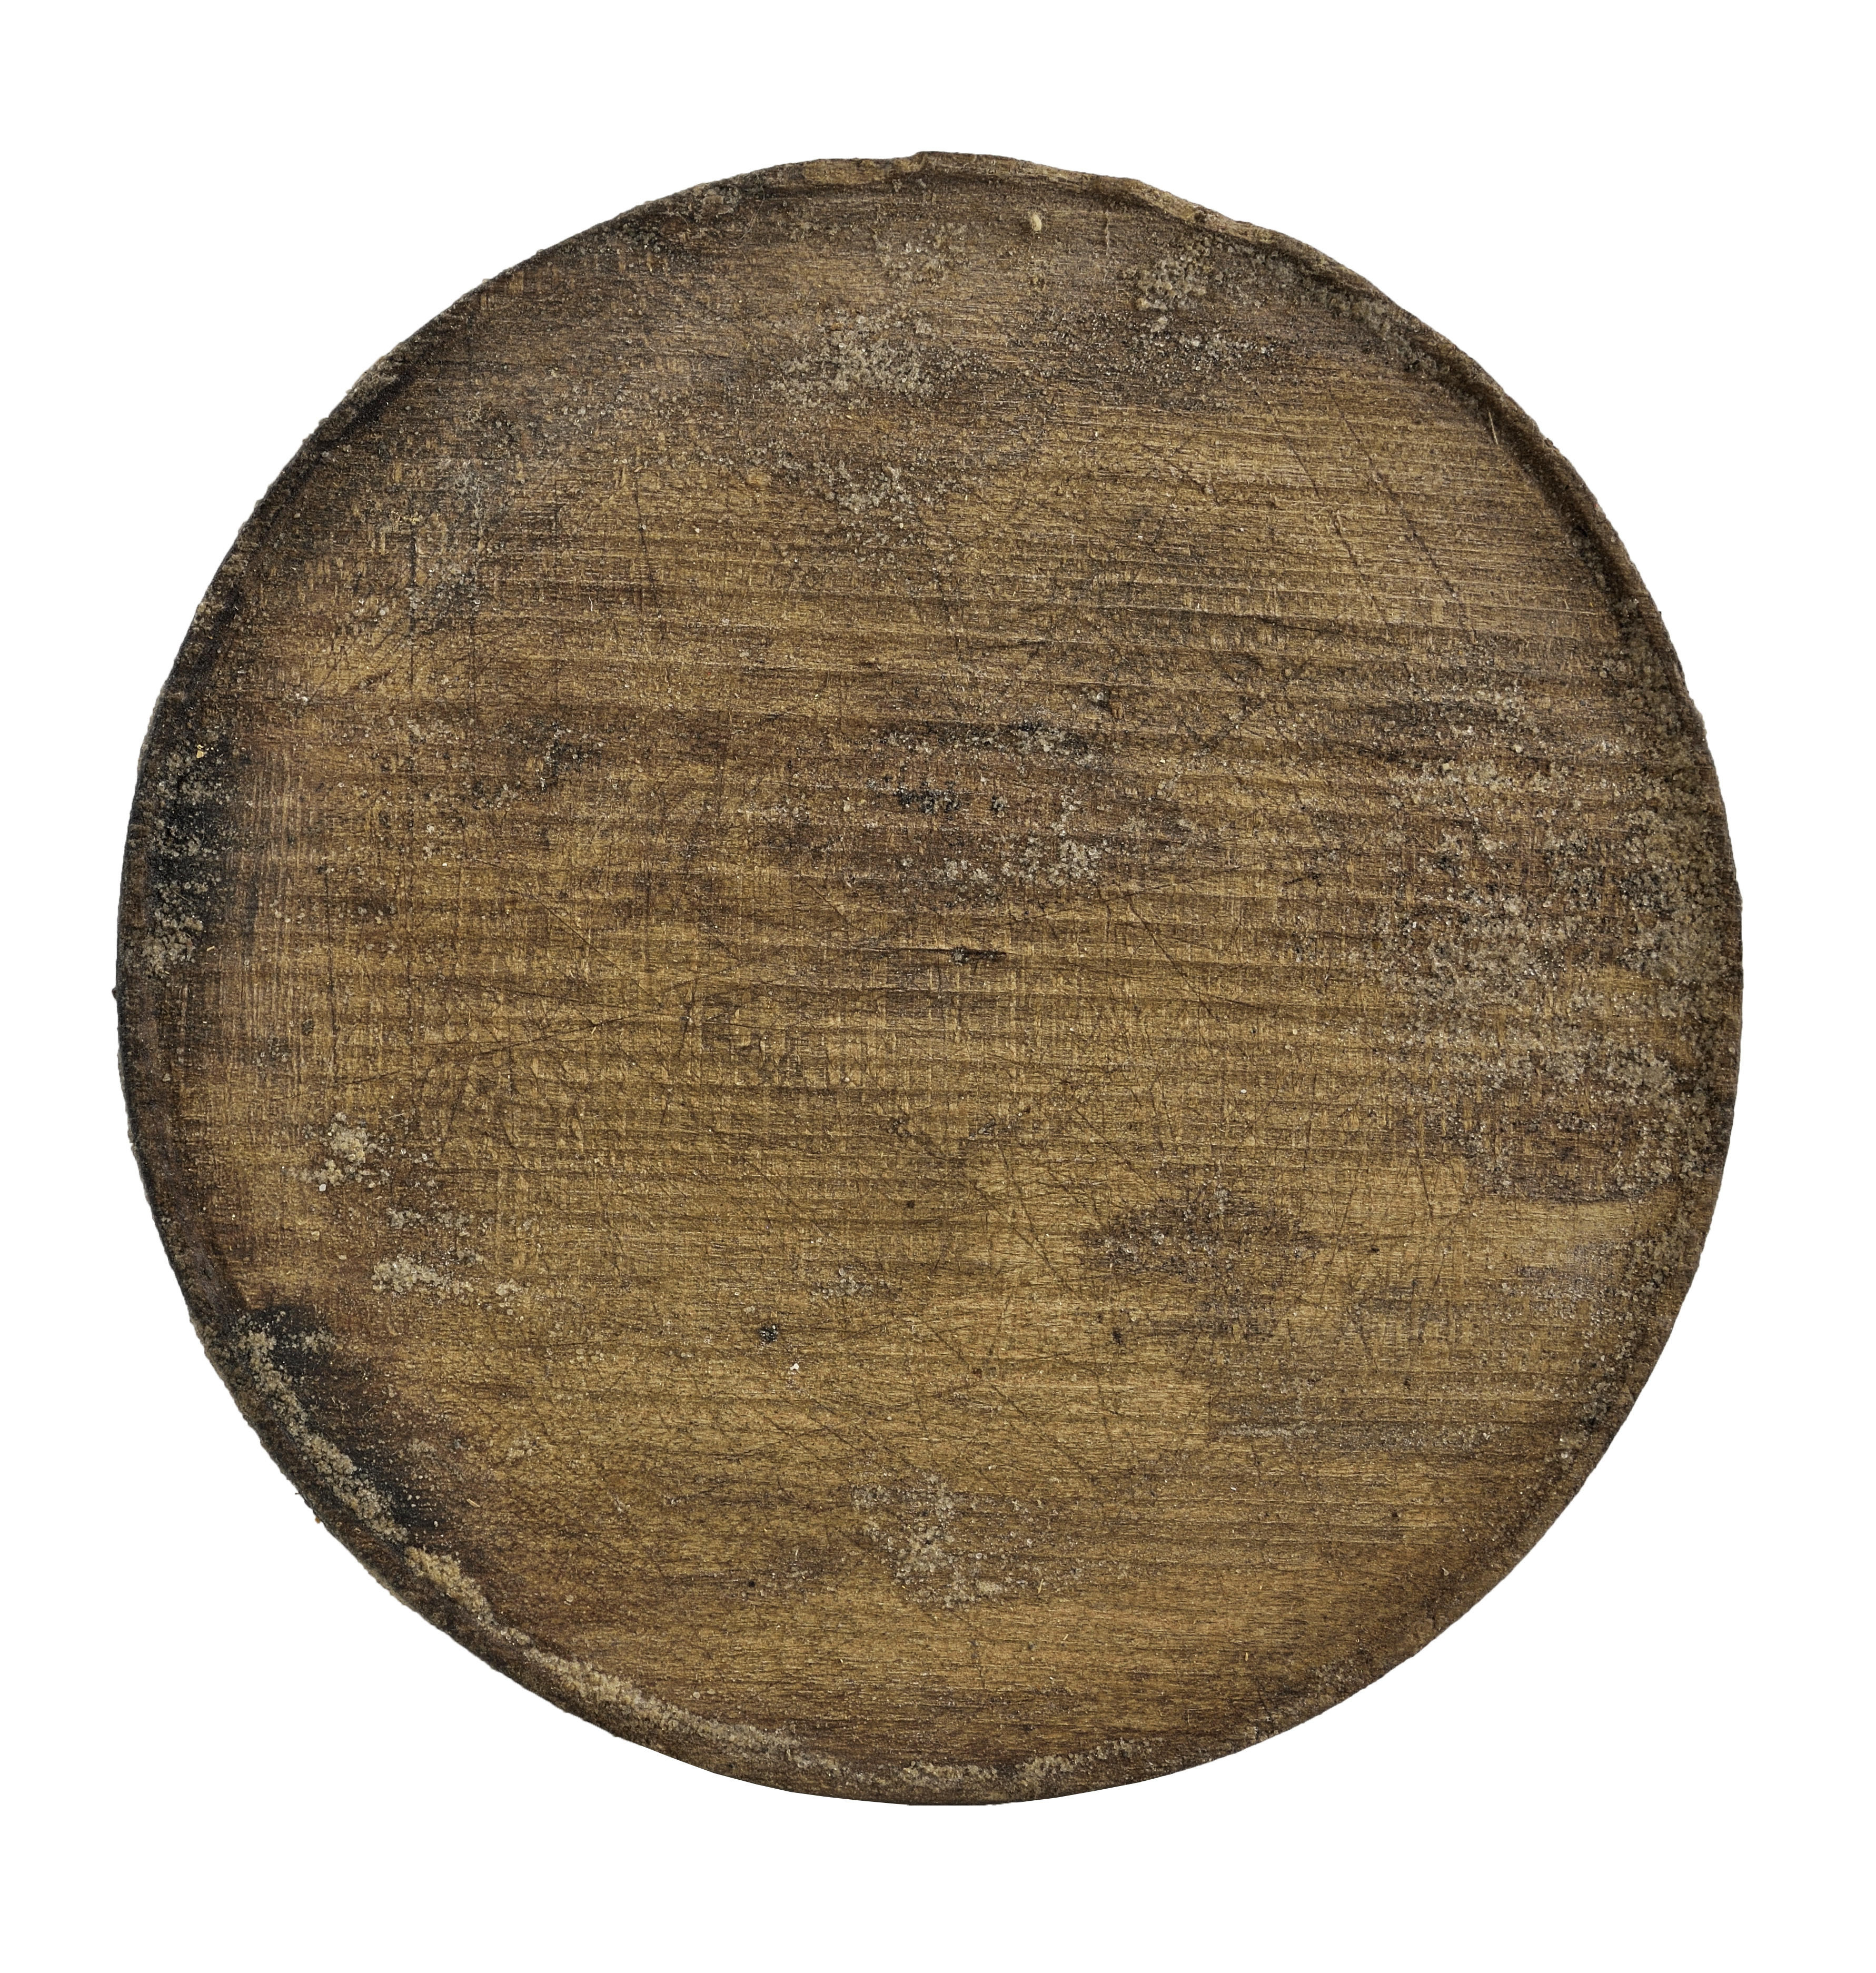 in hout, collectie- Raakvlak, BR84-KAR-1-2-A-10.jpg - Wikimedia Commons